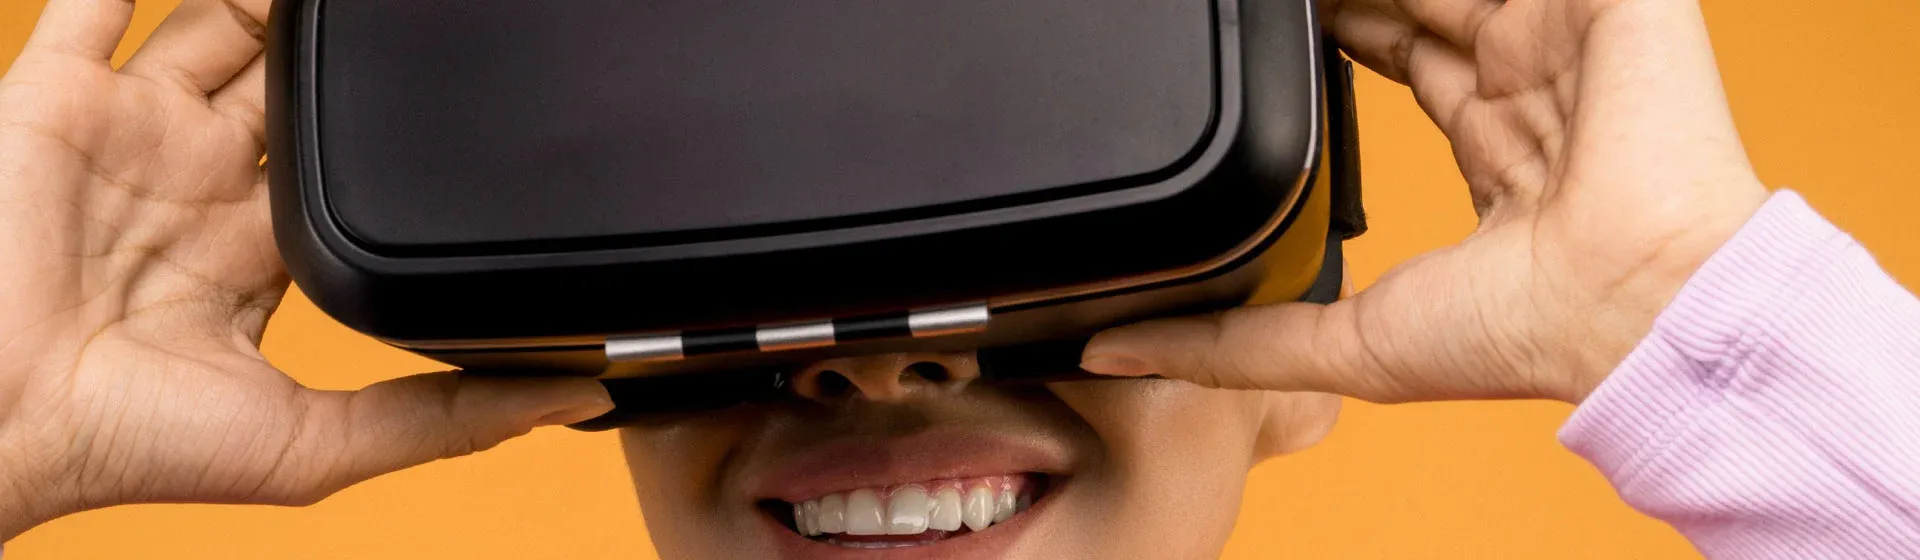 Os Sinais Da Realidade Virtual Ajustaram-se Para Os Jogos 3D E O